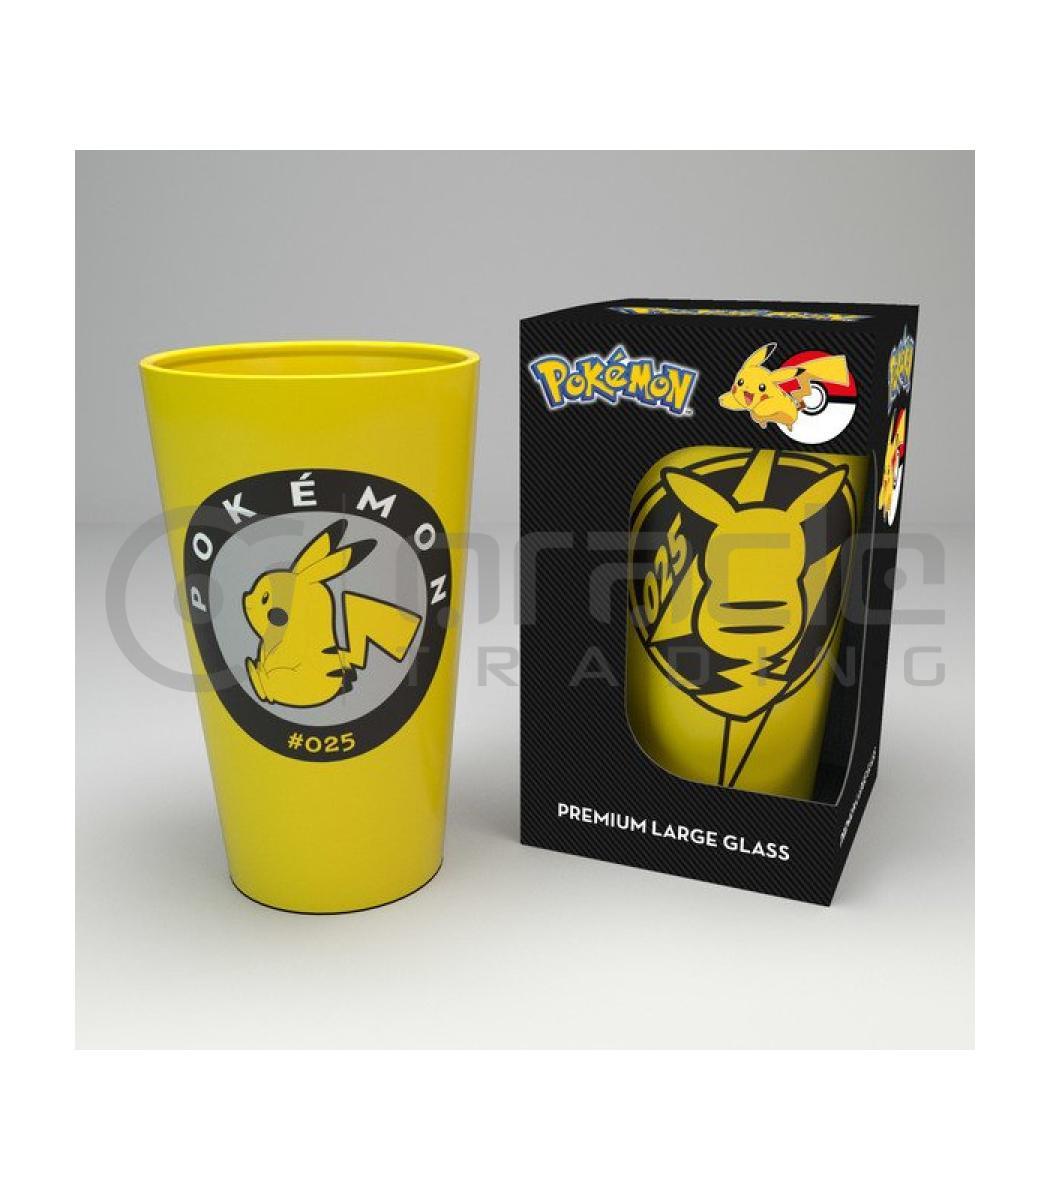 Pokémon Large Glass (Premium)